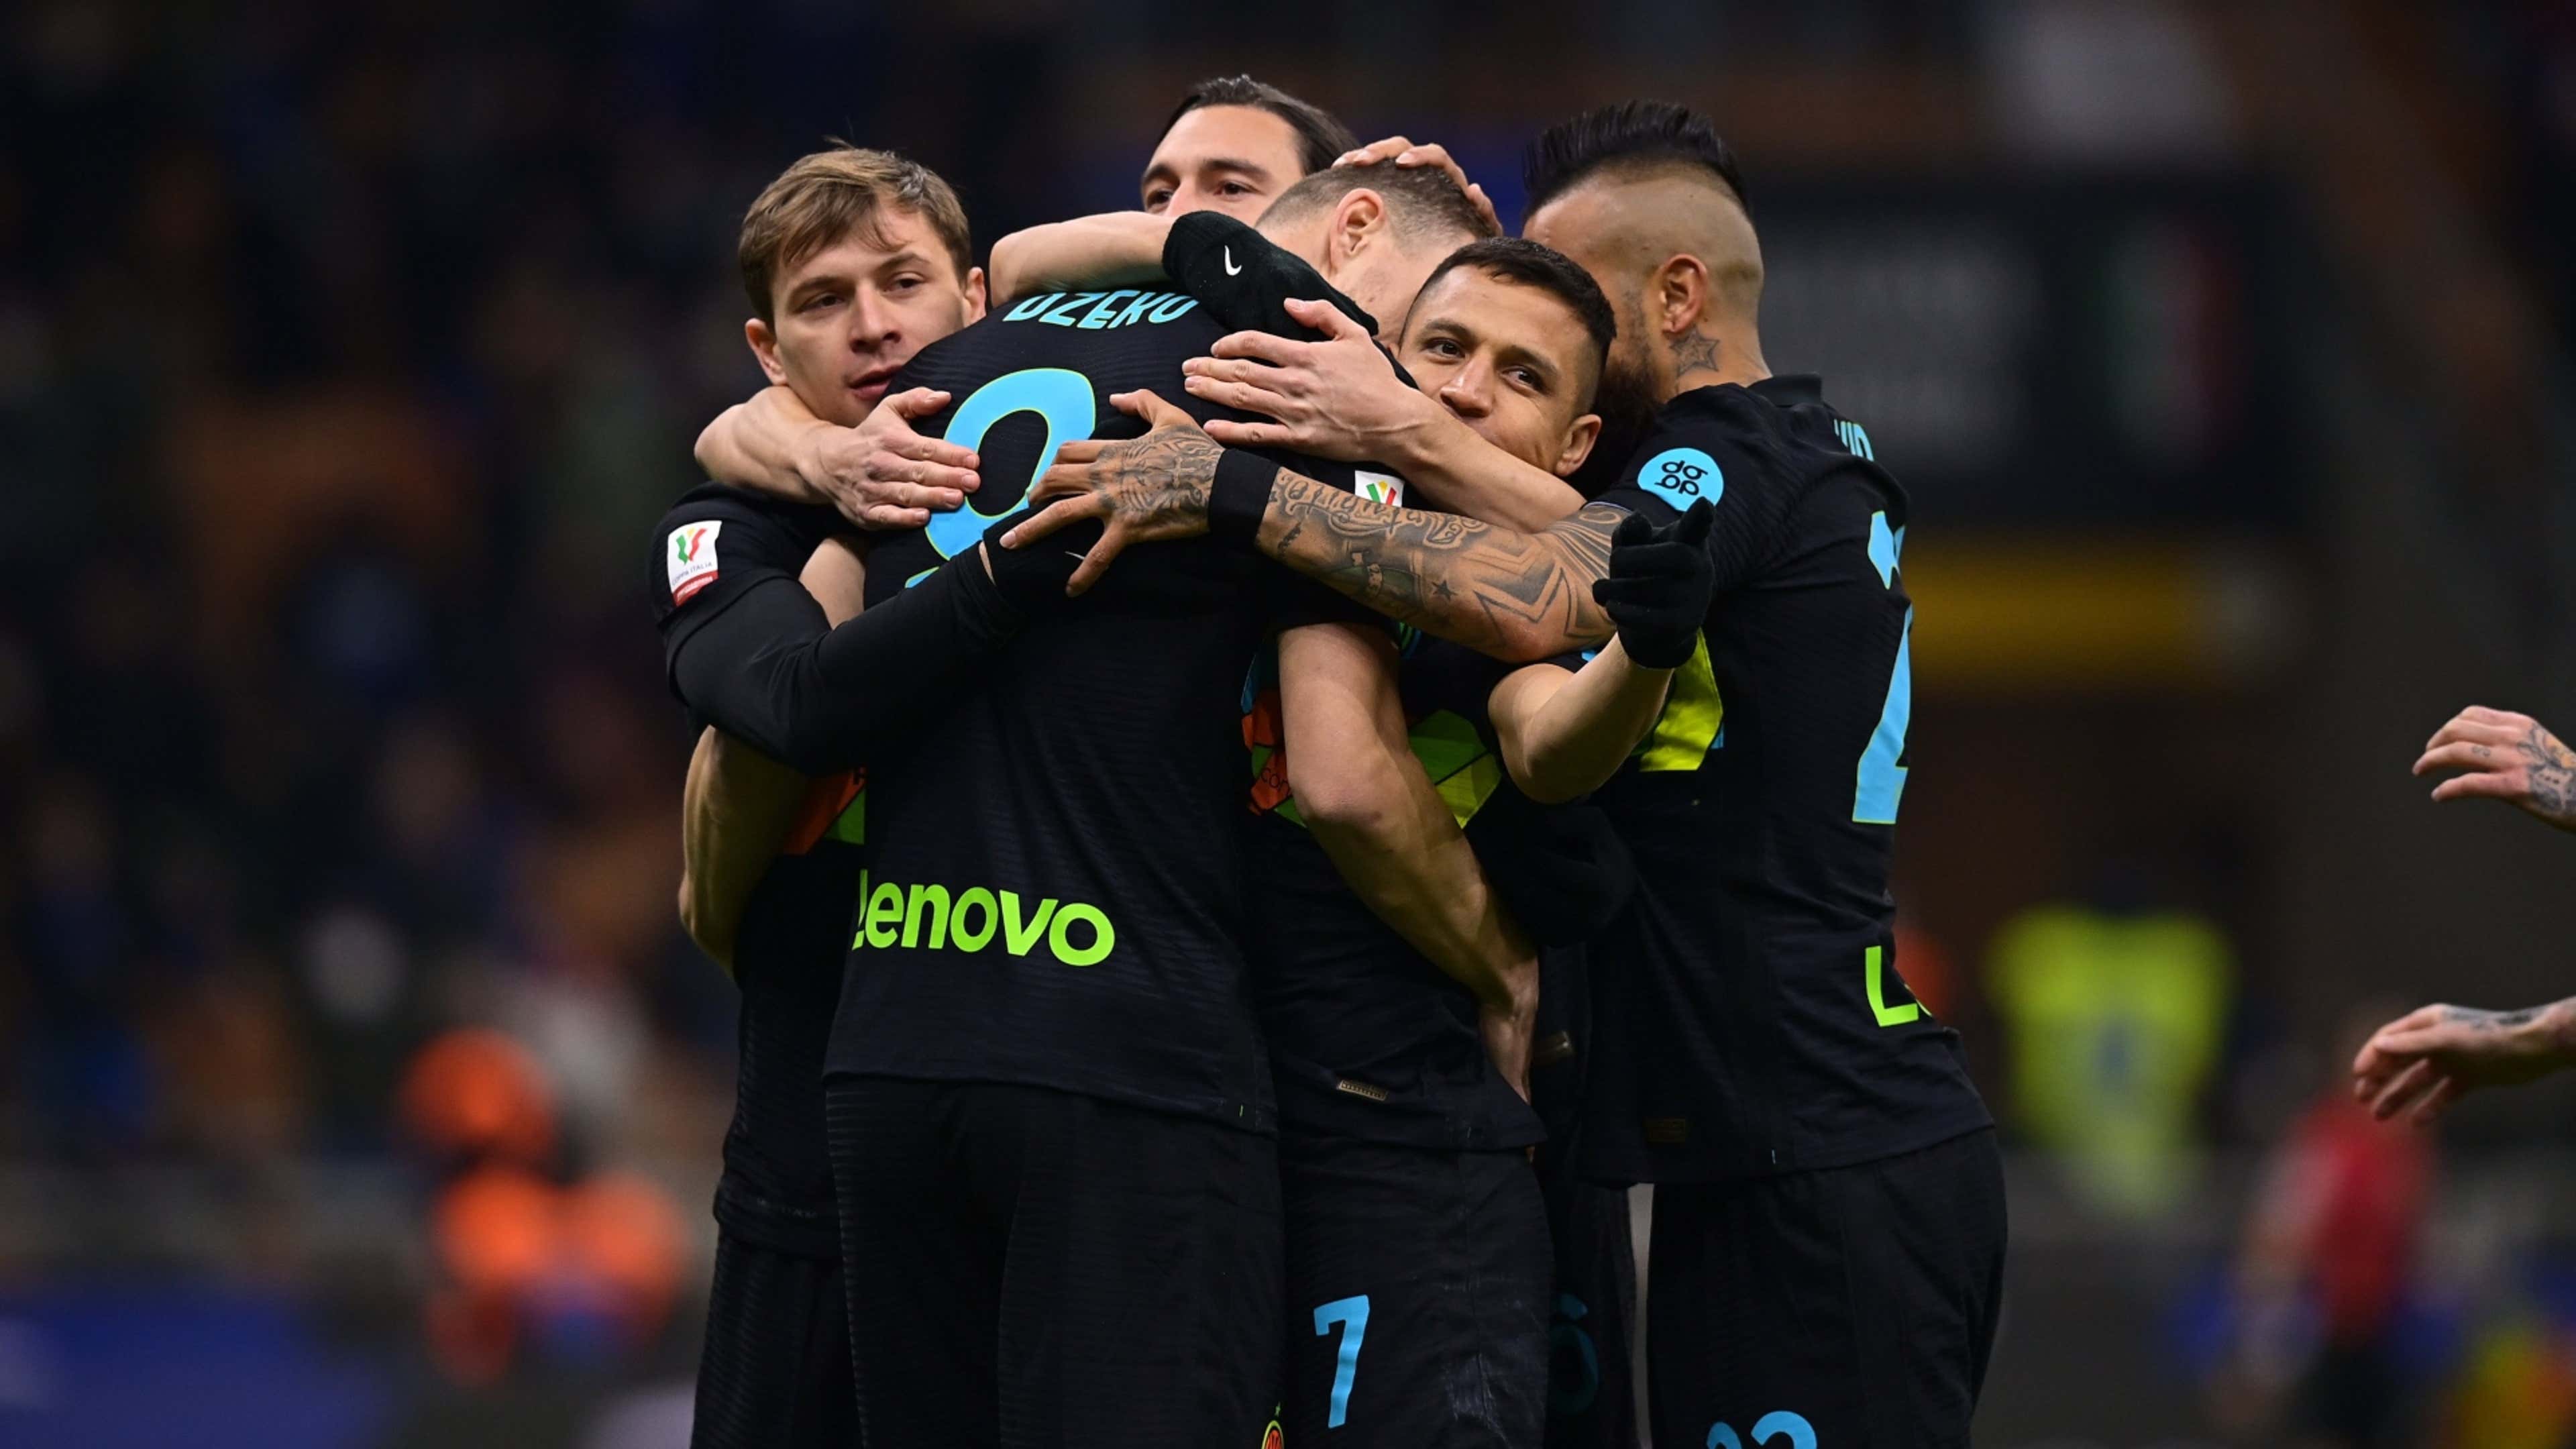 080222 Inter Roma Gol de Edin Dzeko Alexis Sánchez y Arturo Vidal